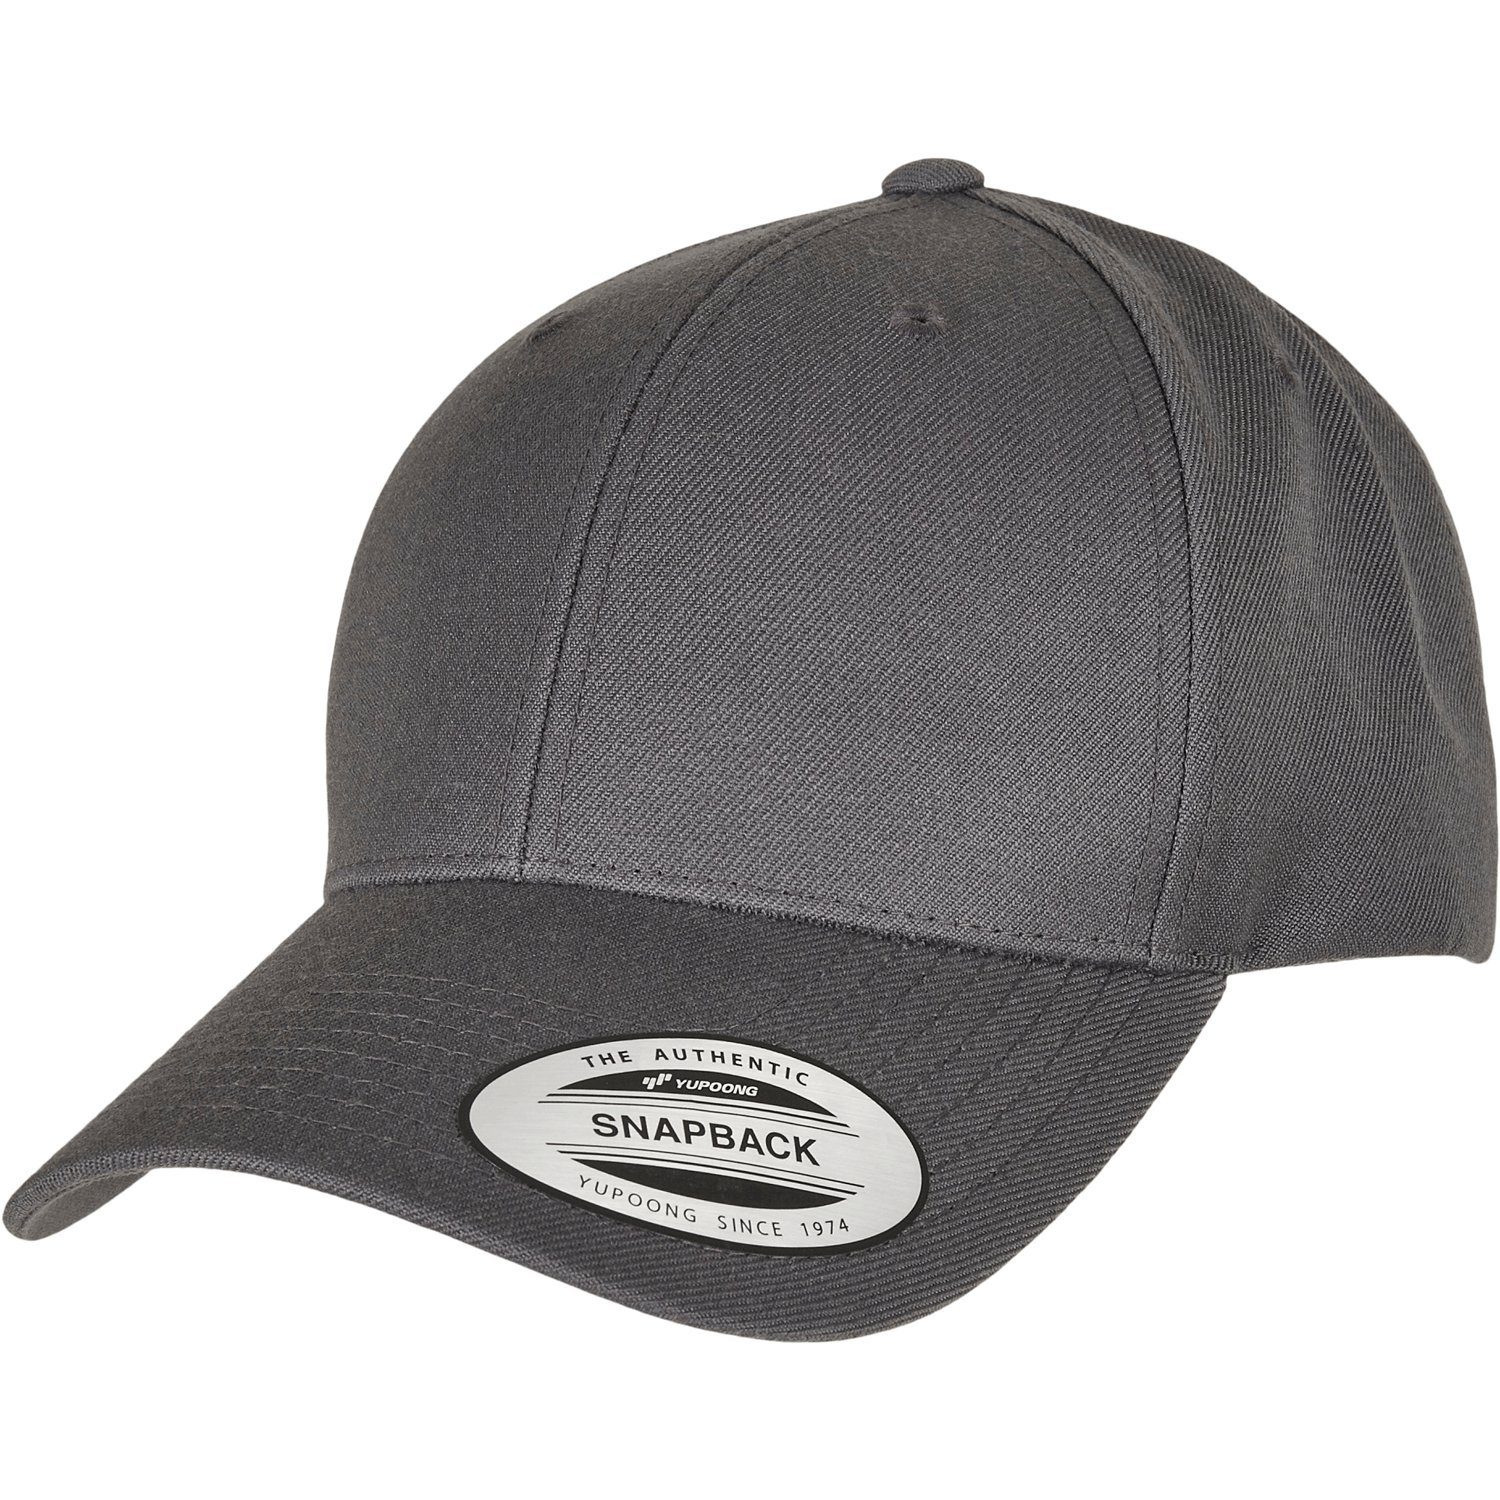 Cap Cap Snapback Flexfit Visor Curved Snapback Premium grey dark Flexfit